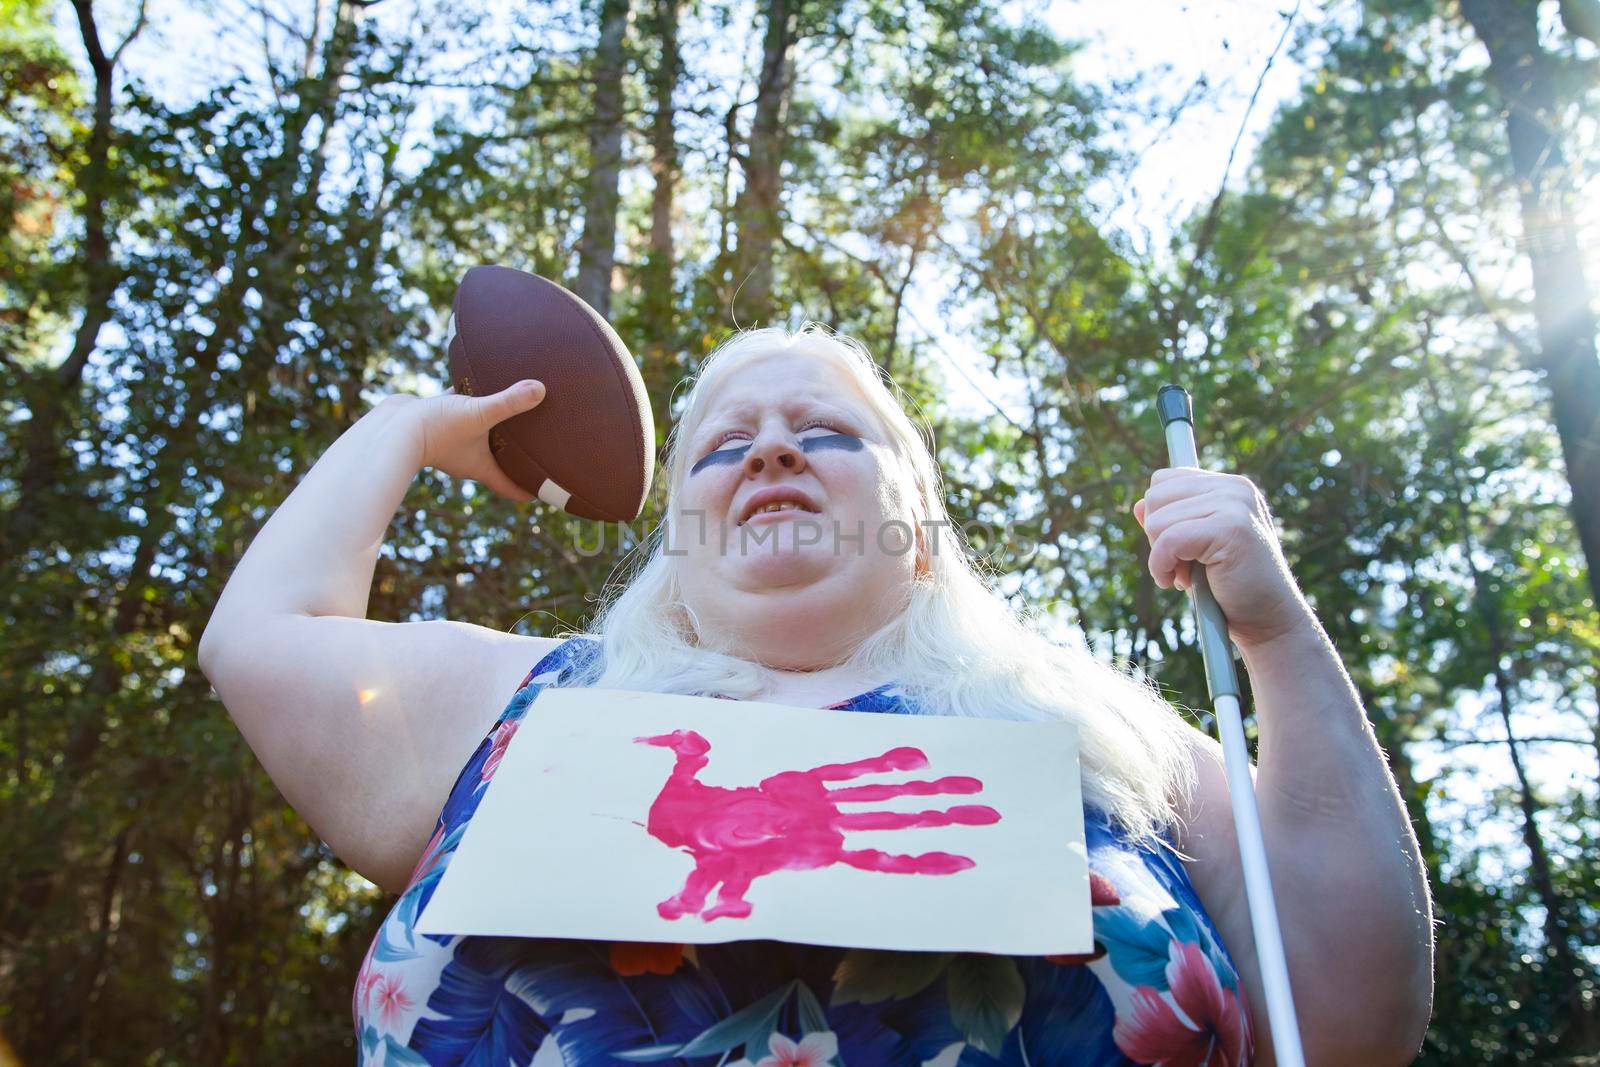 Albino Woman Playing Thanksgiving Football by tornado98